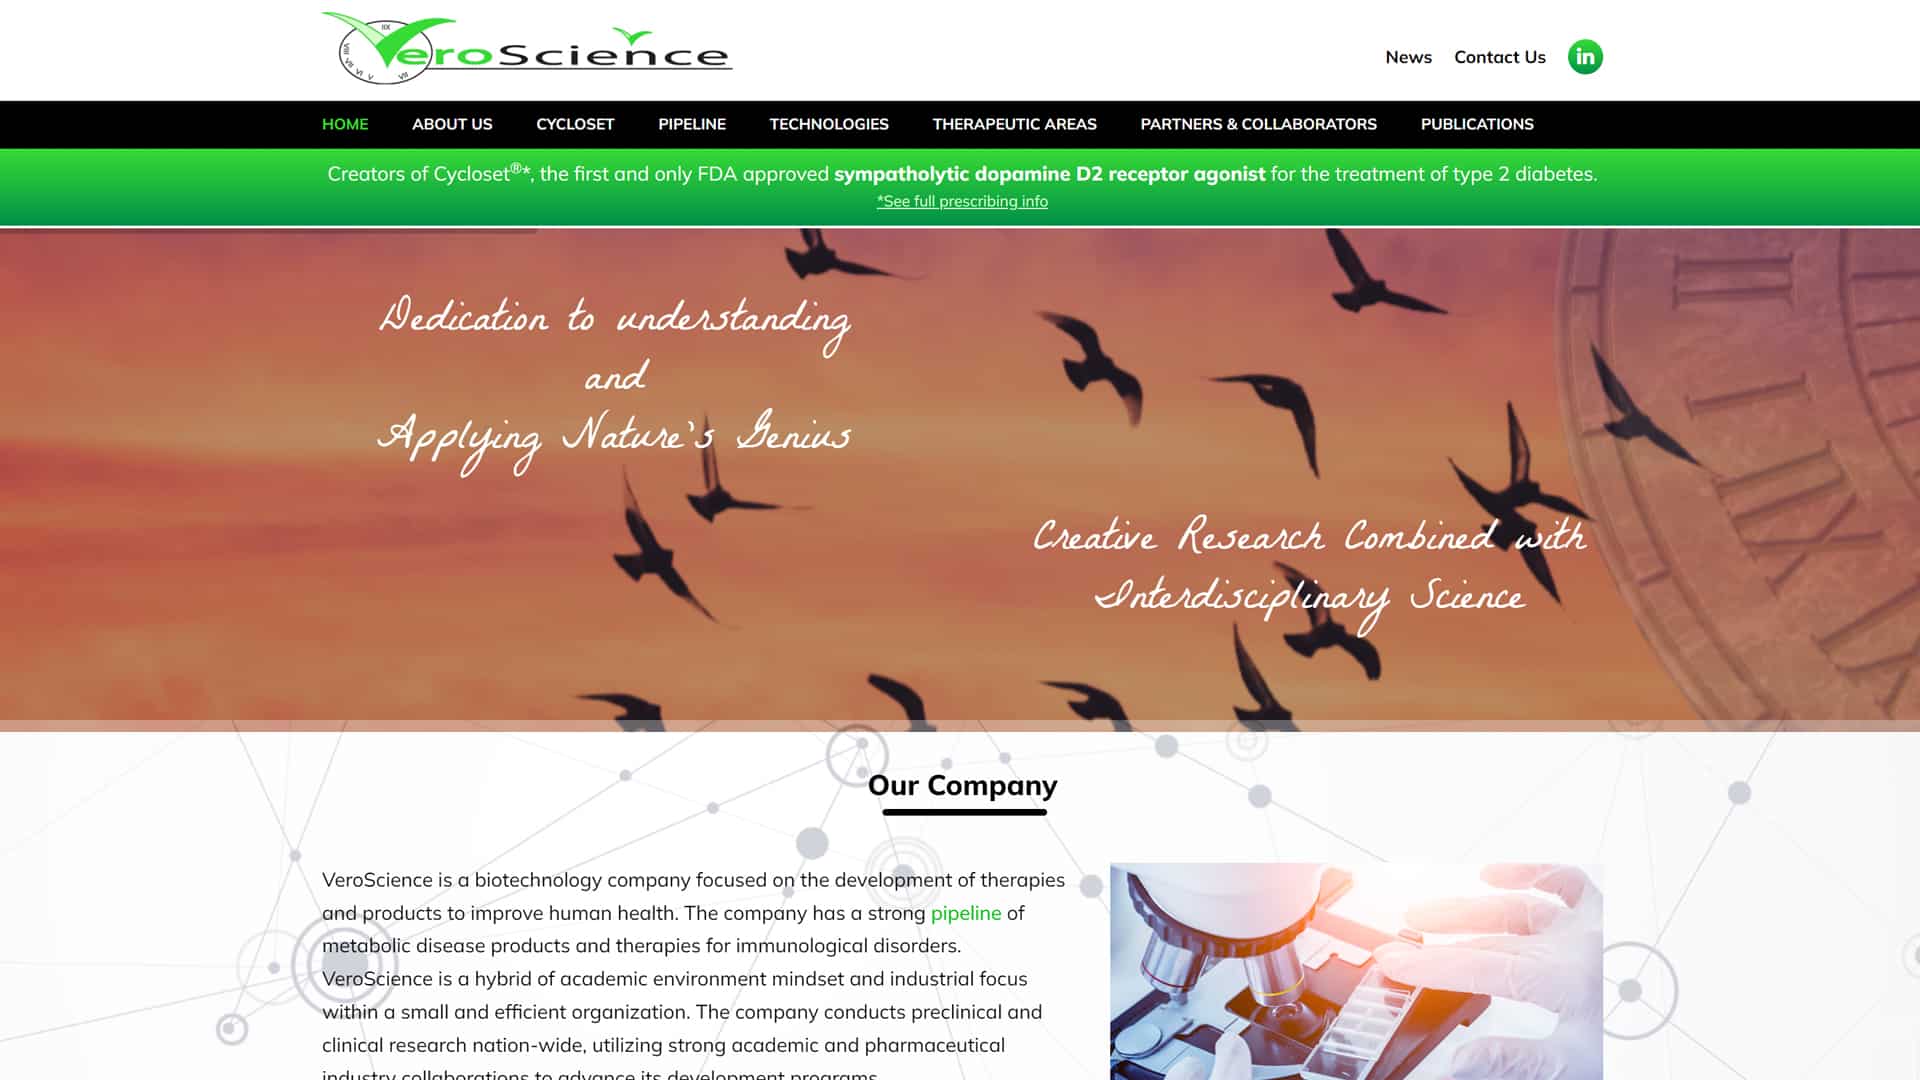 VeroScience biotech website portfolio web project featured image